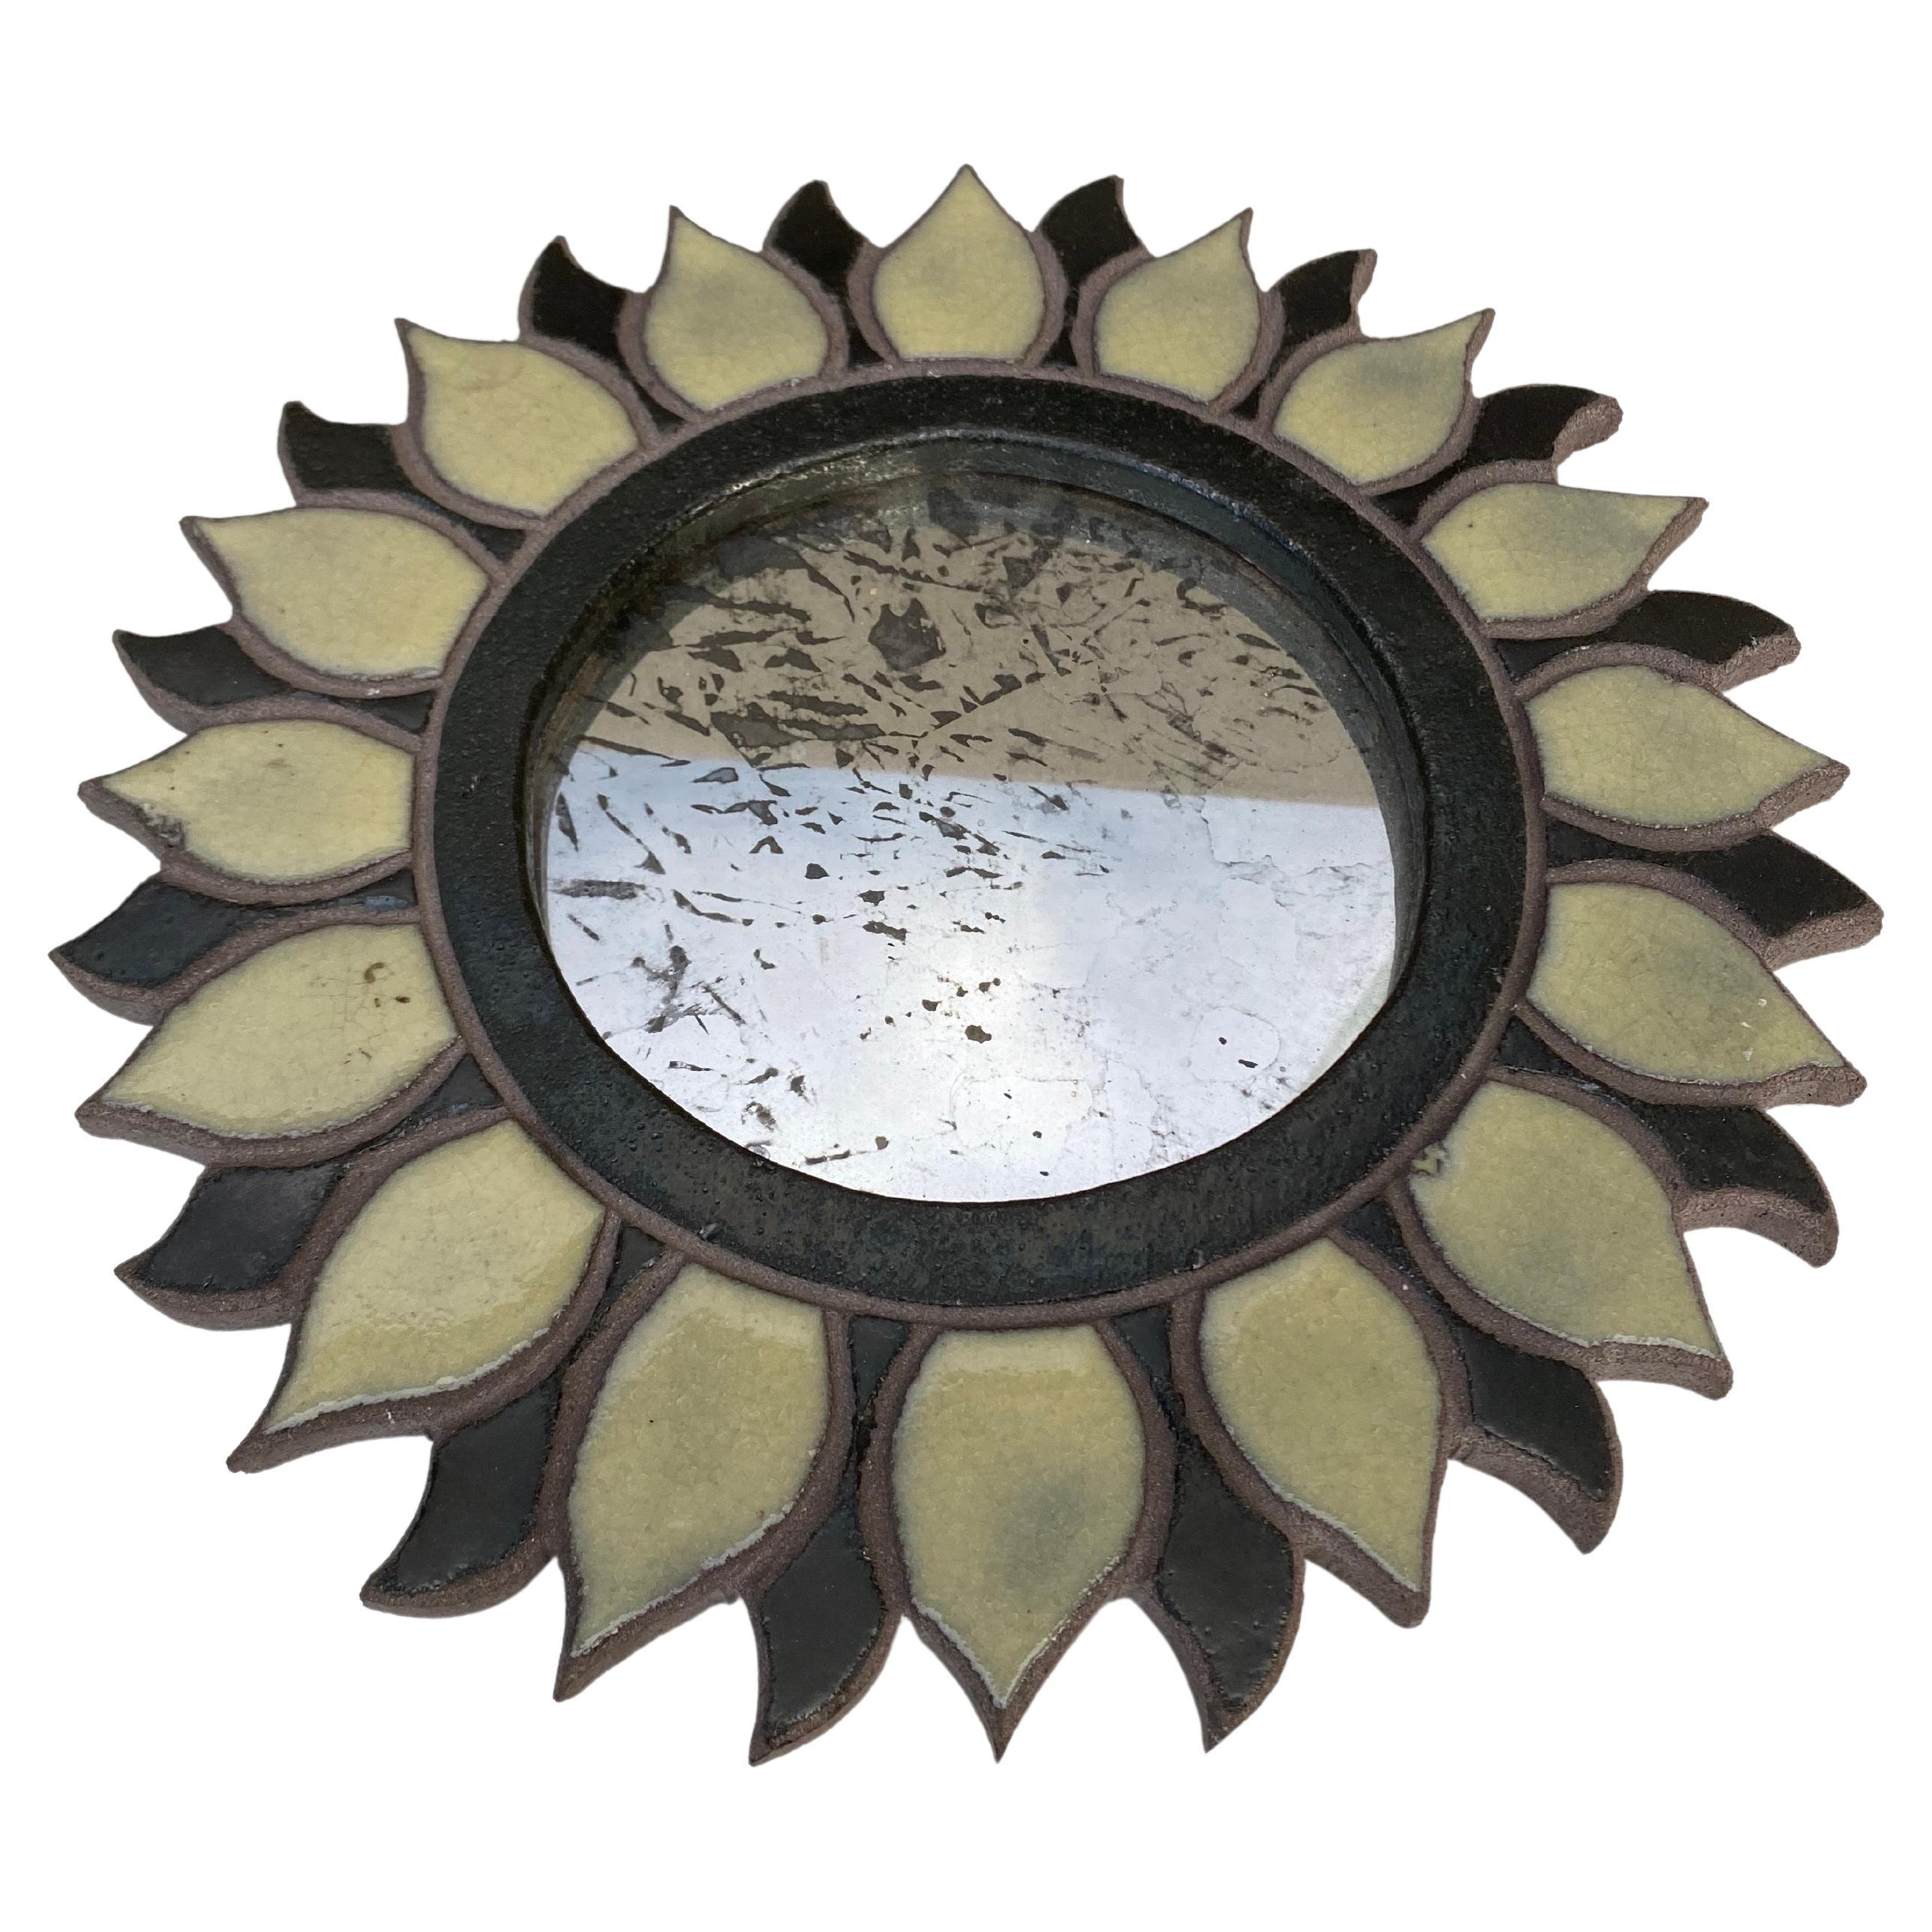 French Original concrete flower mirror circa 1970.
Diameter / 12.8 inches.
Stains on mirror.